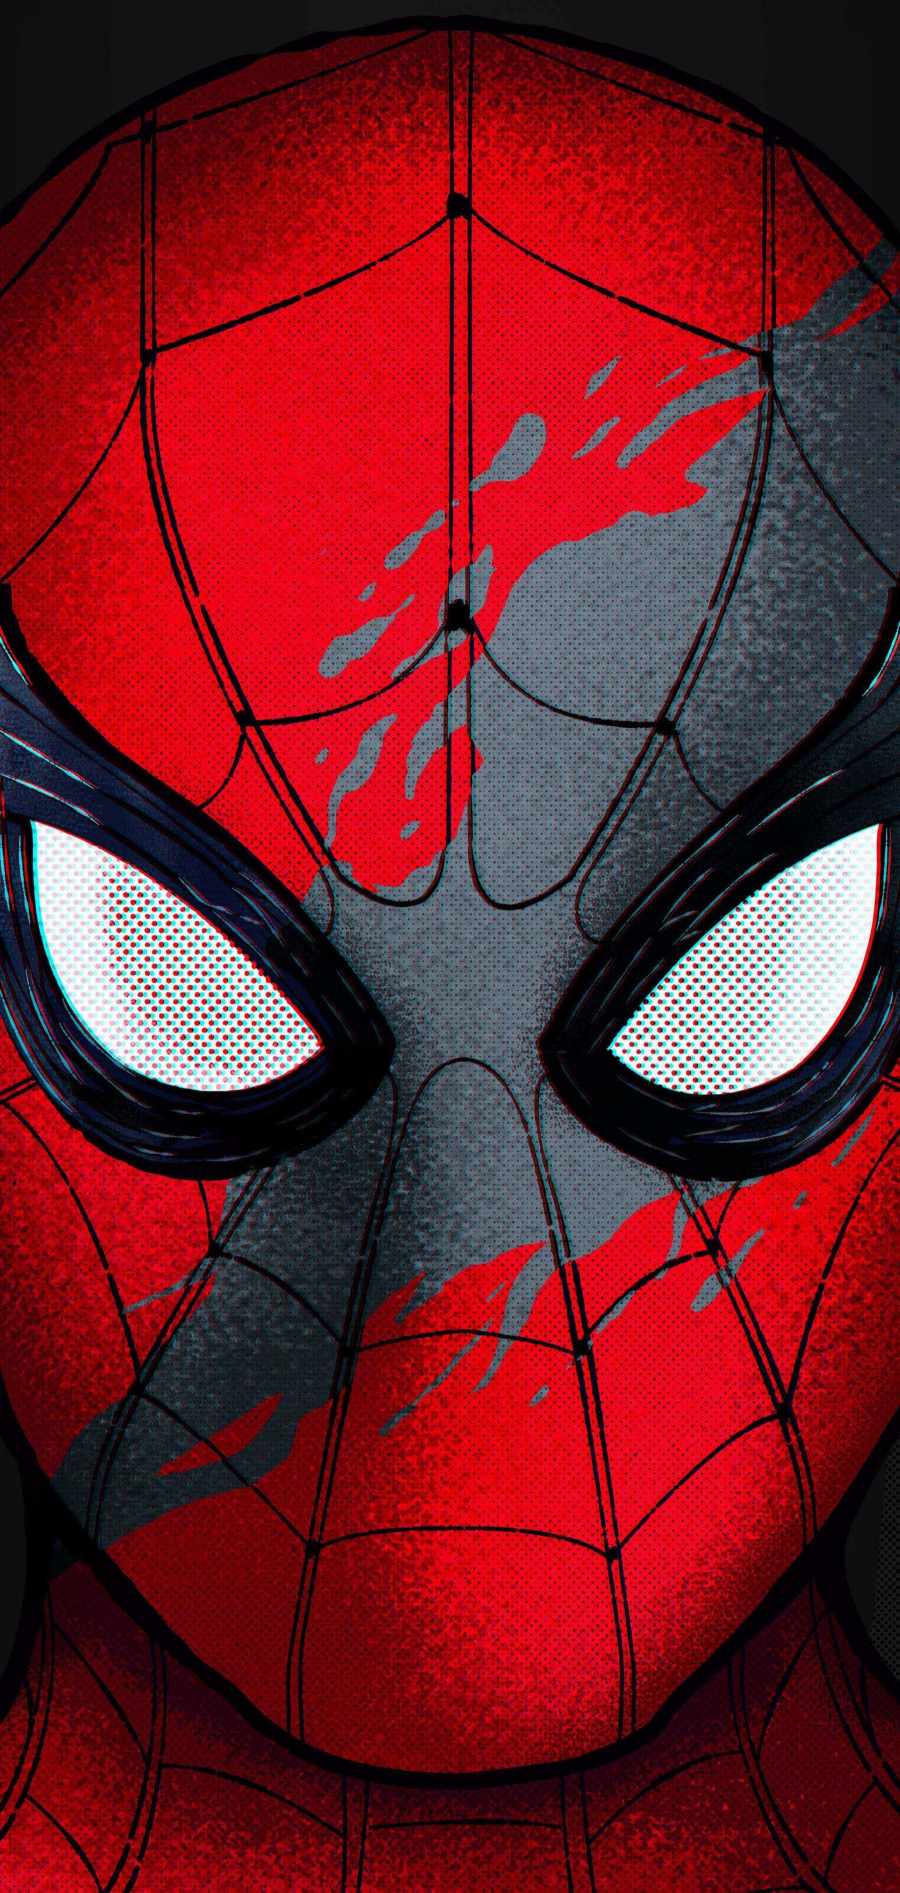 Spiderman Comic Art iPhone Wallpaper